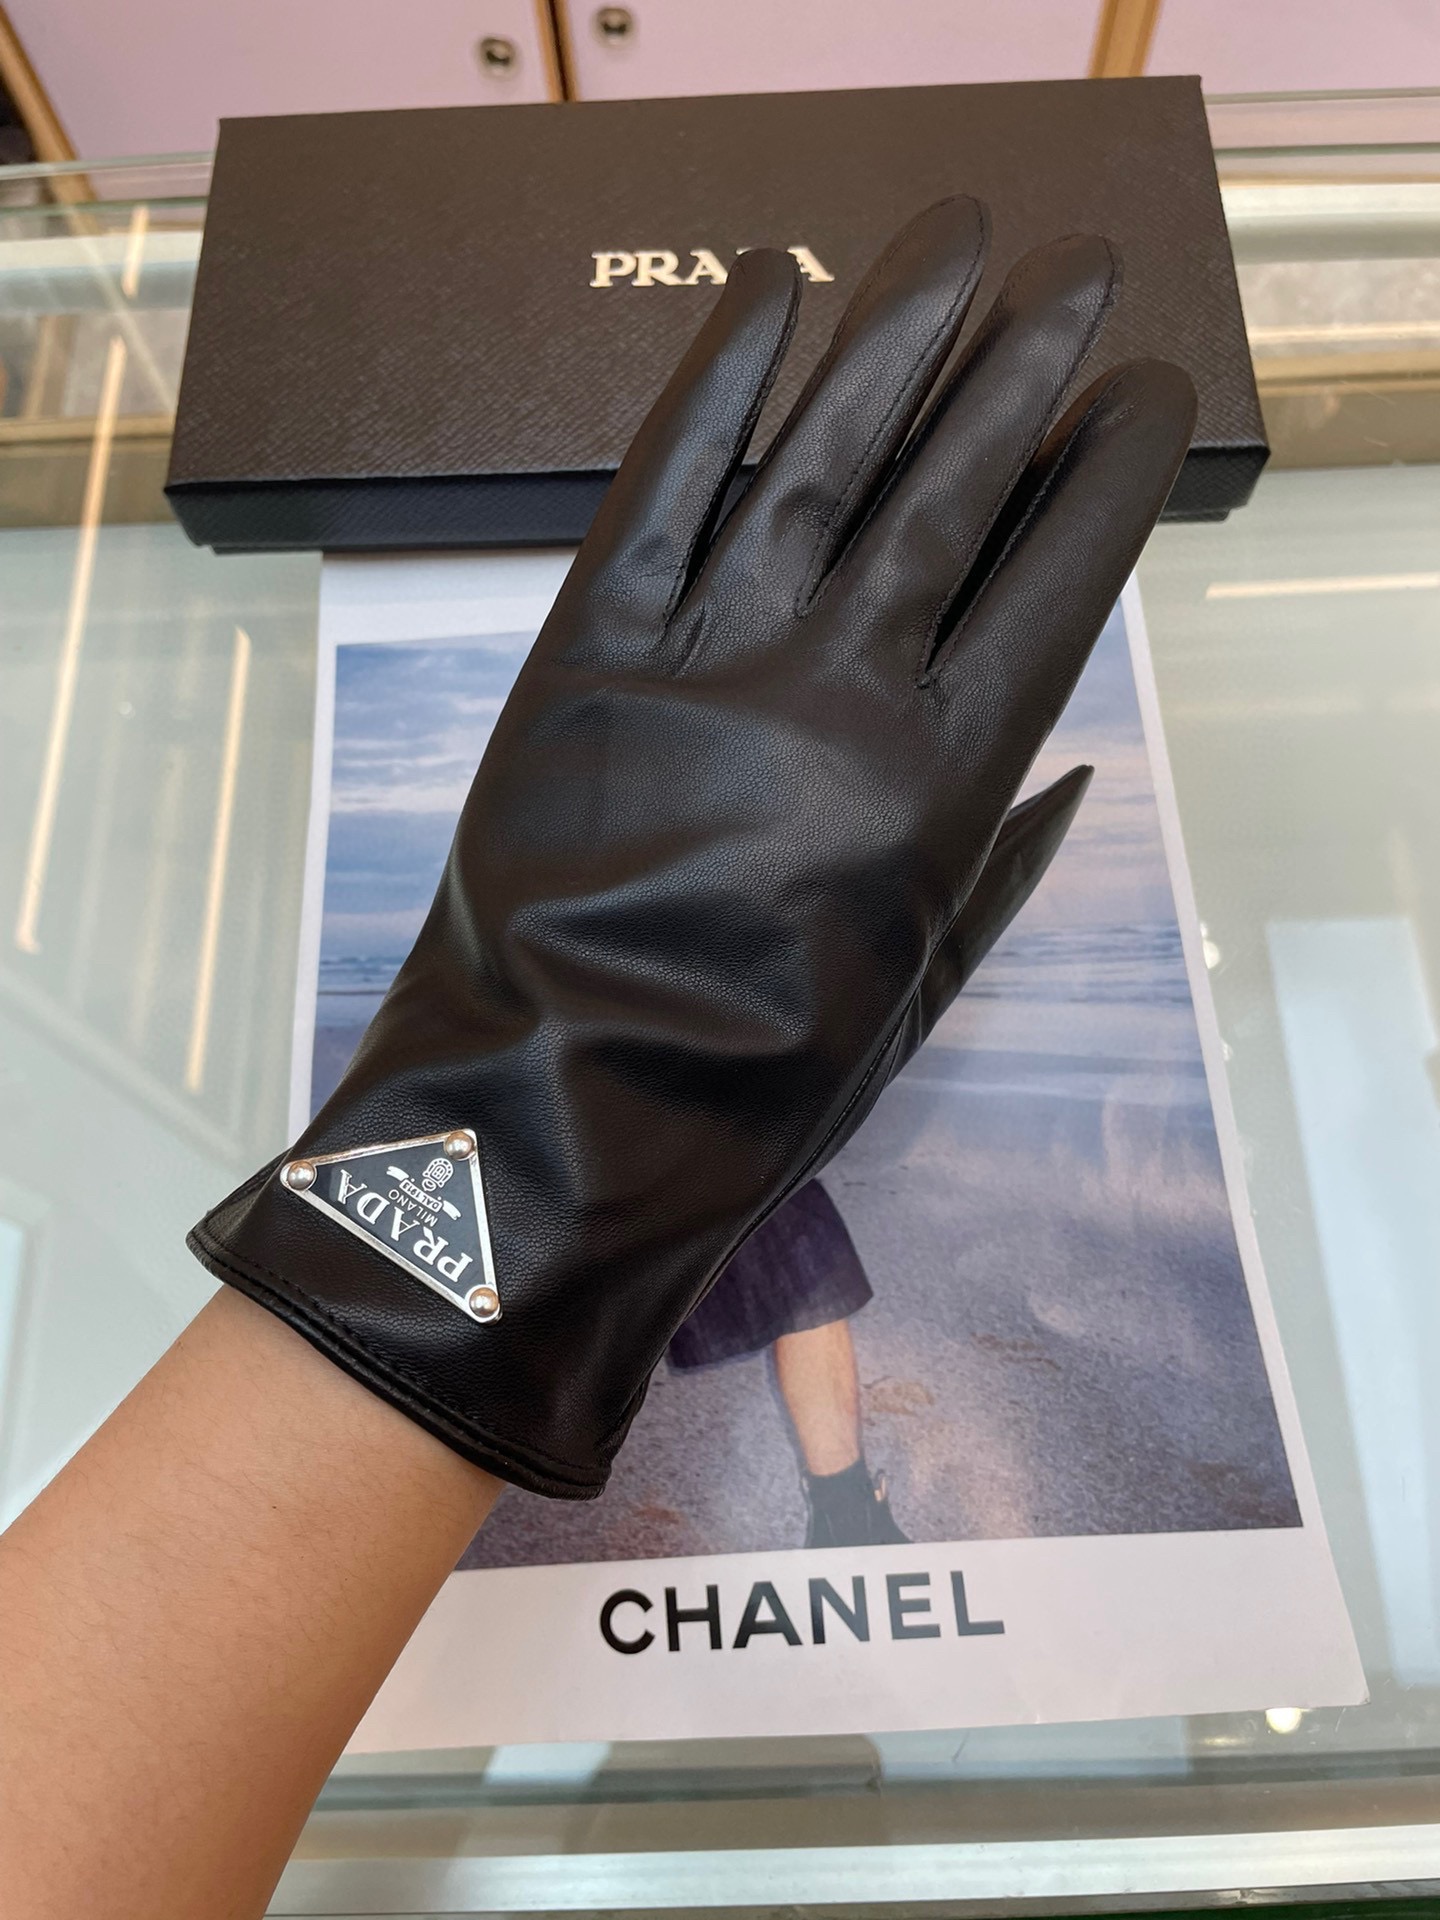 ️普拉达新款女士手套一级羊皮皮质超薄柔软舒适特显手型质感超群码数ML